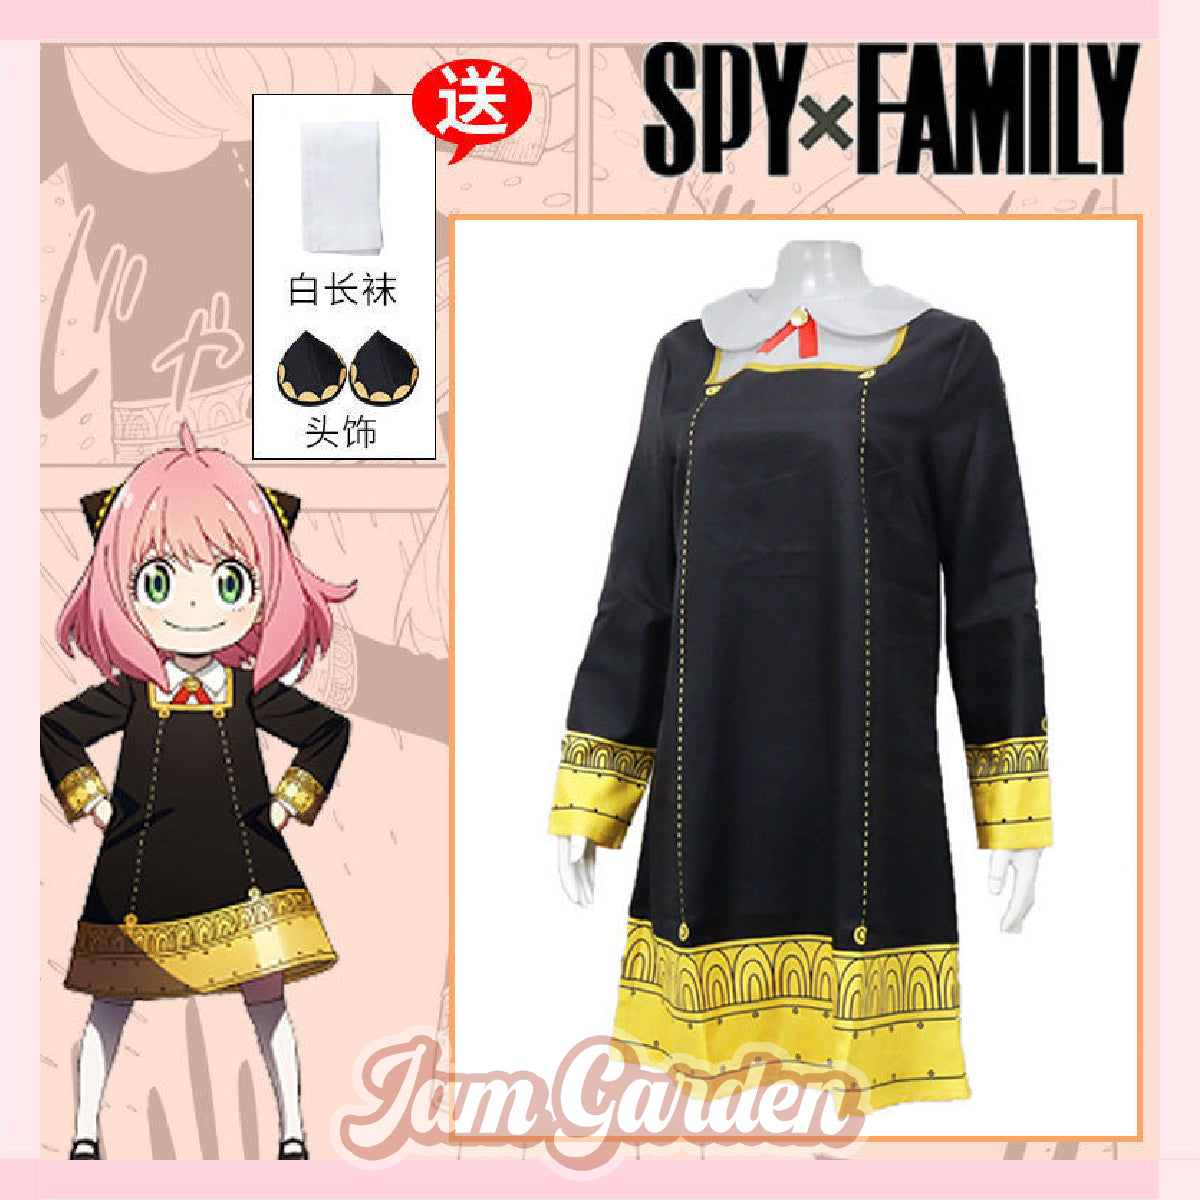 Spy family cosplay costume Aniya full C suit